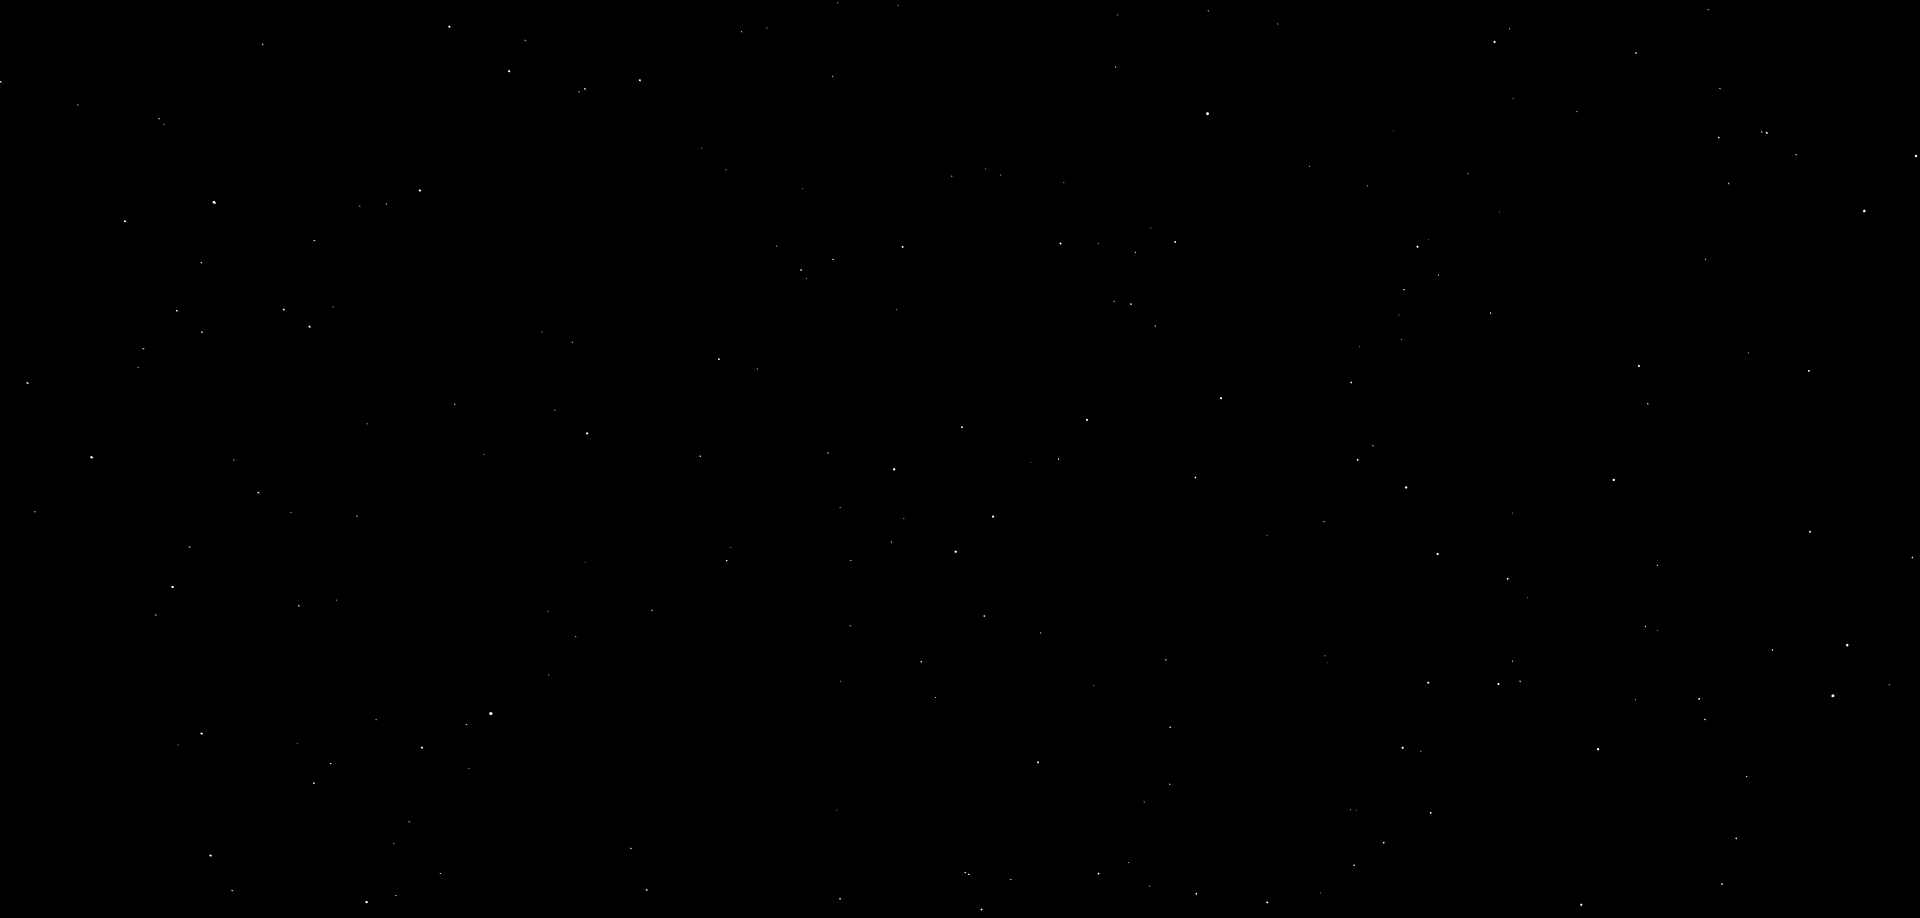 General 1920x918 stars night sky black background simple background minimalism